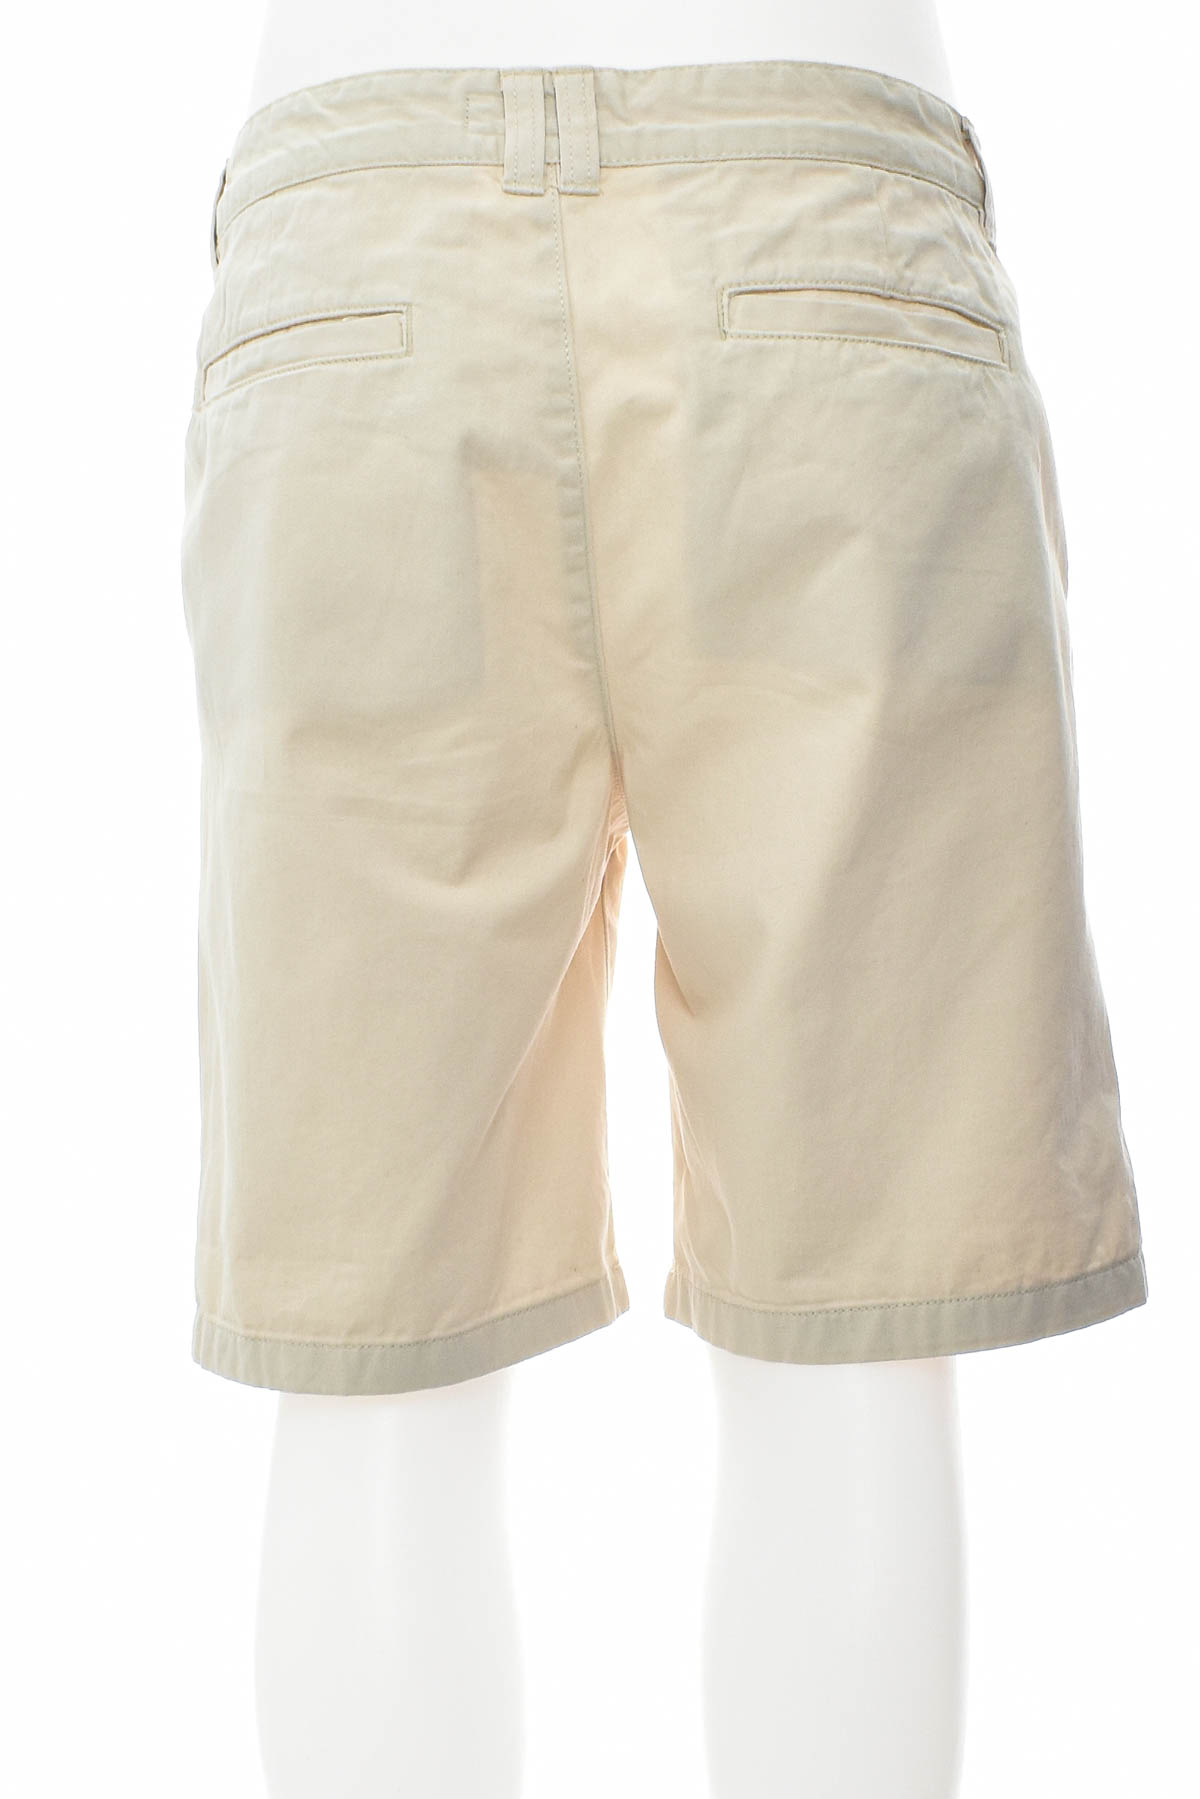 Men's shorts - Boohoo MAN - 1